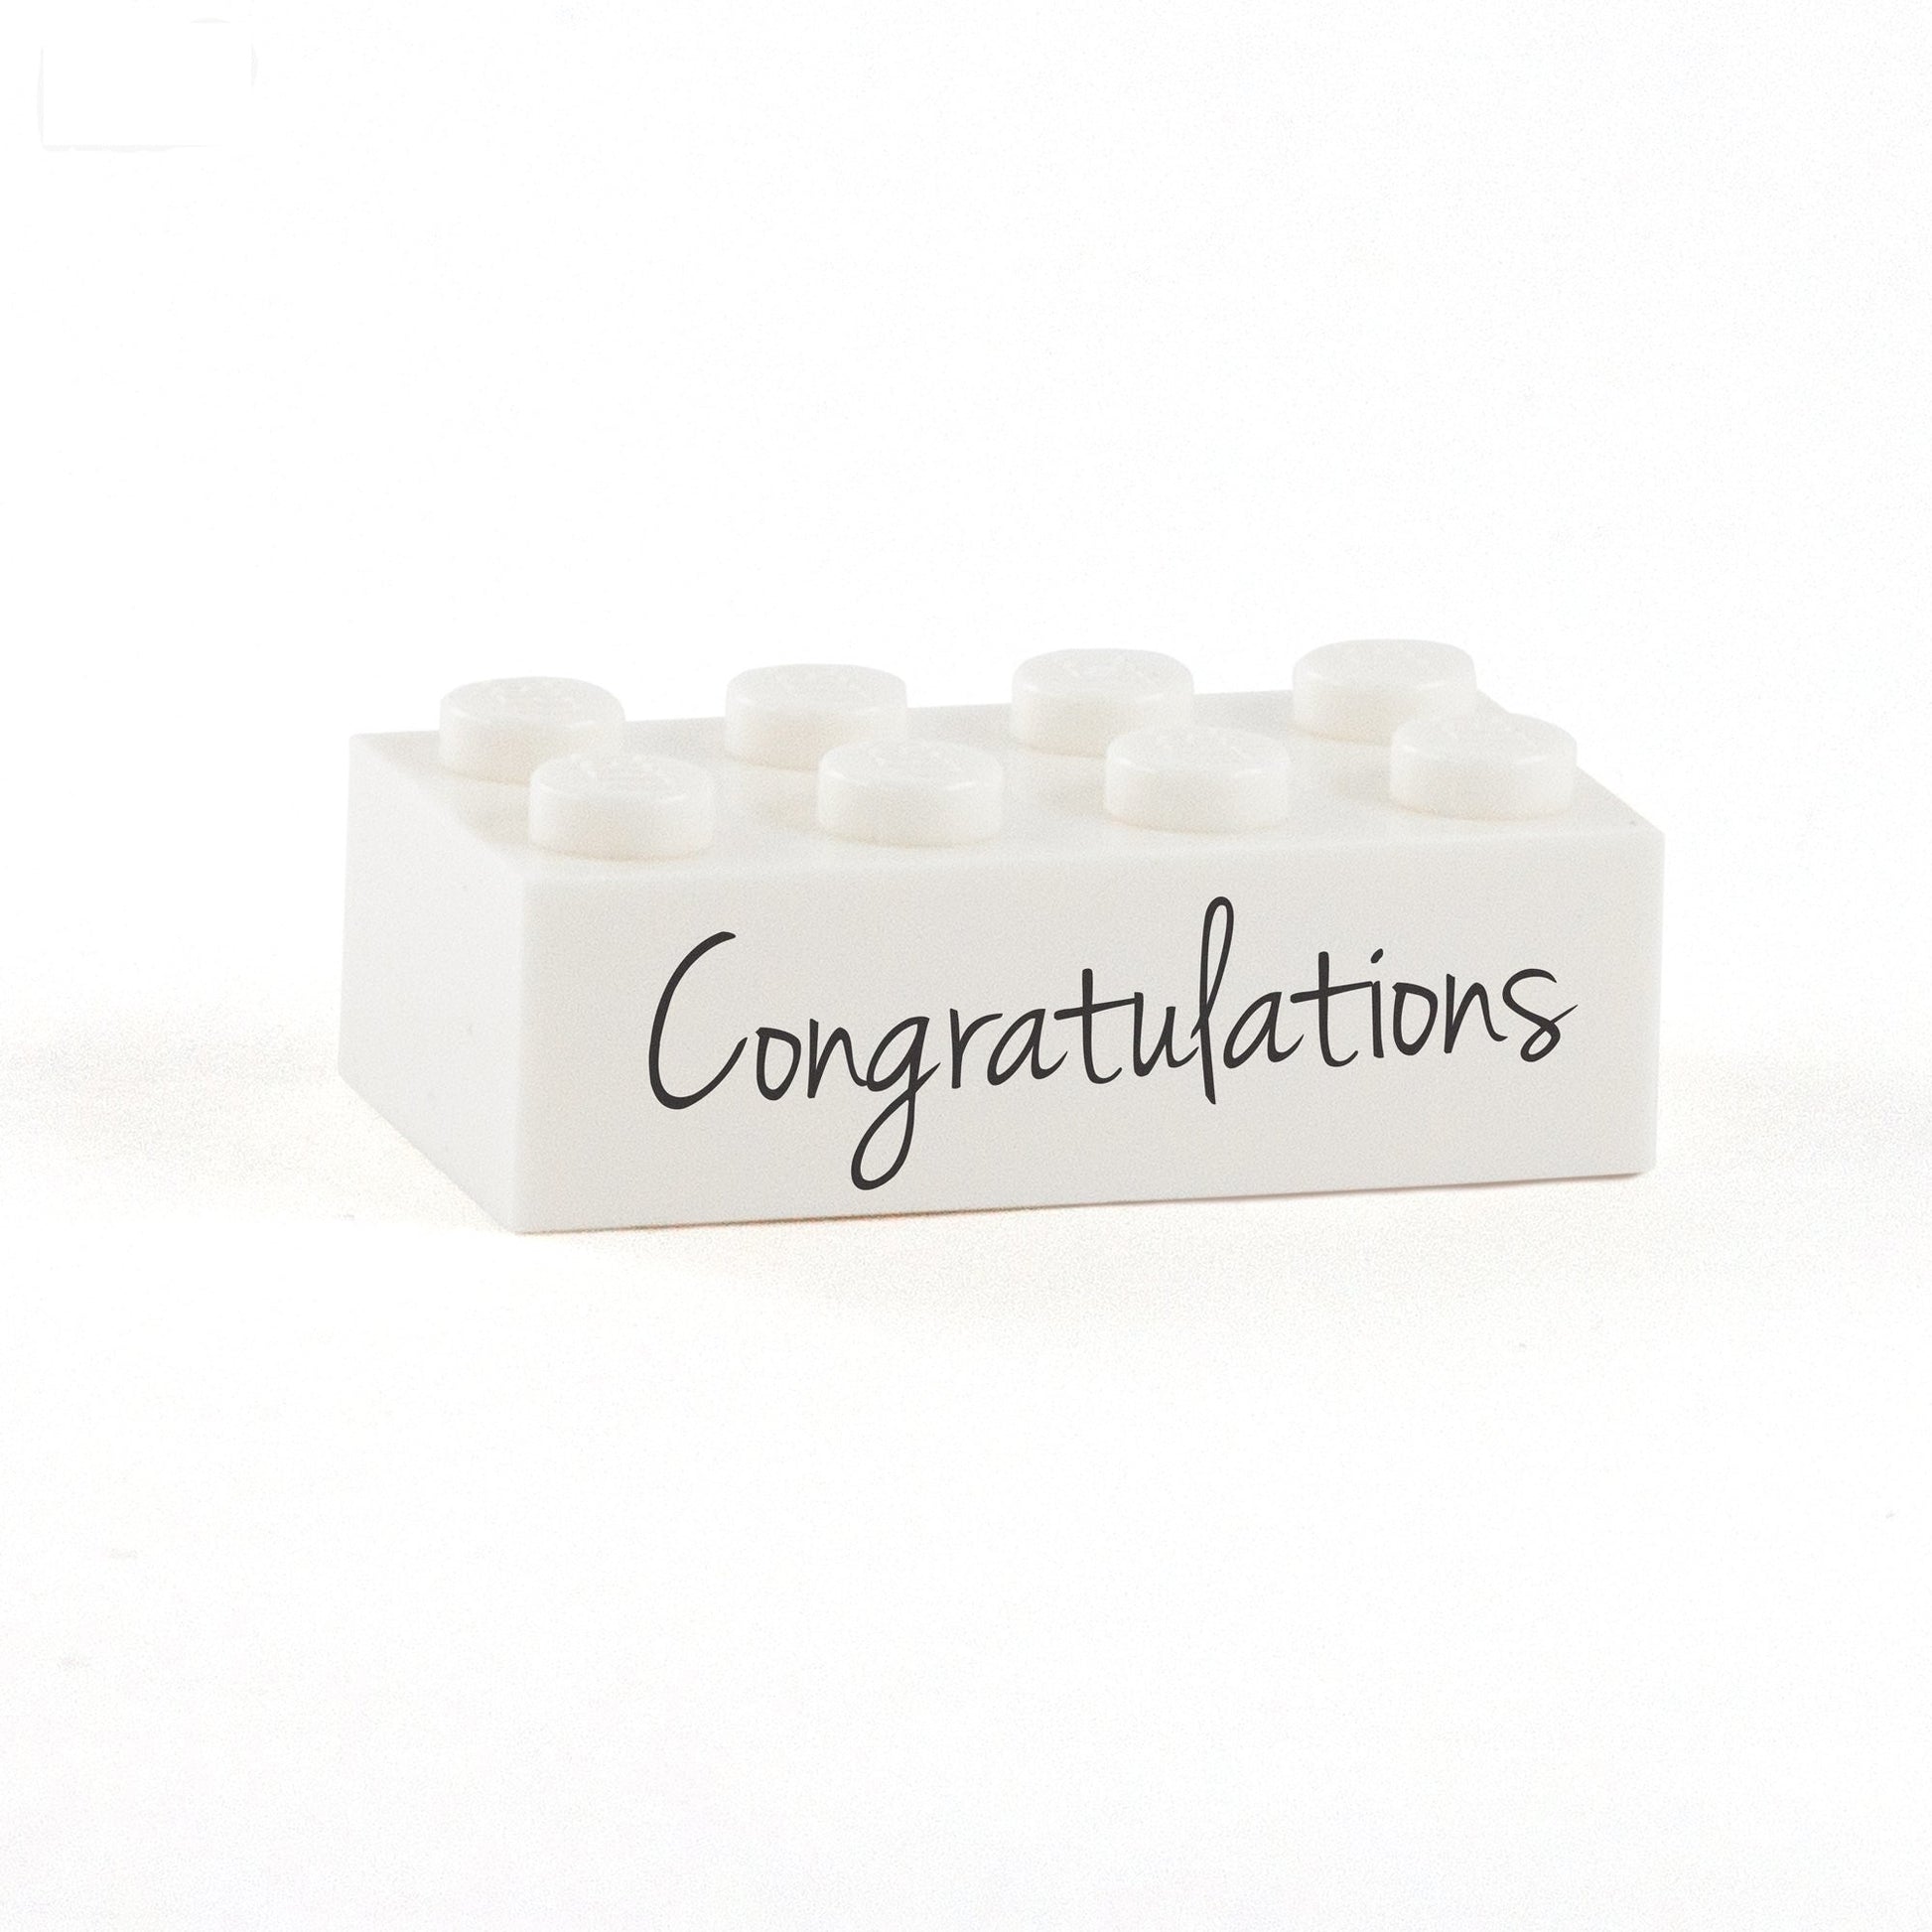 Congratulations Display Brick - Custom Printed 2x4 LEGO Brick, Minifigure Display